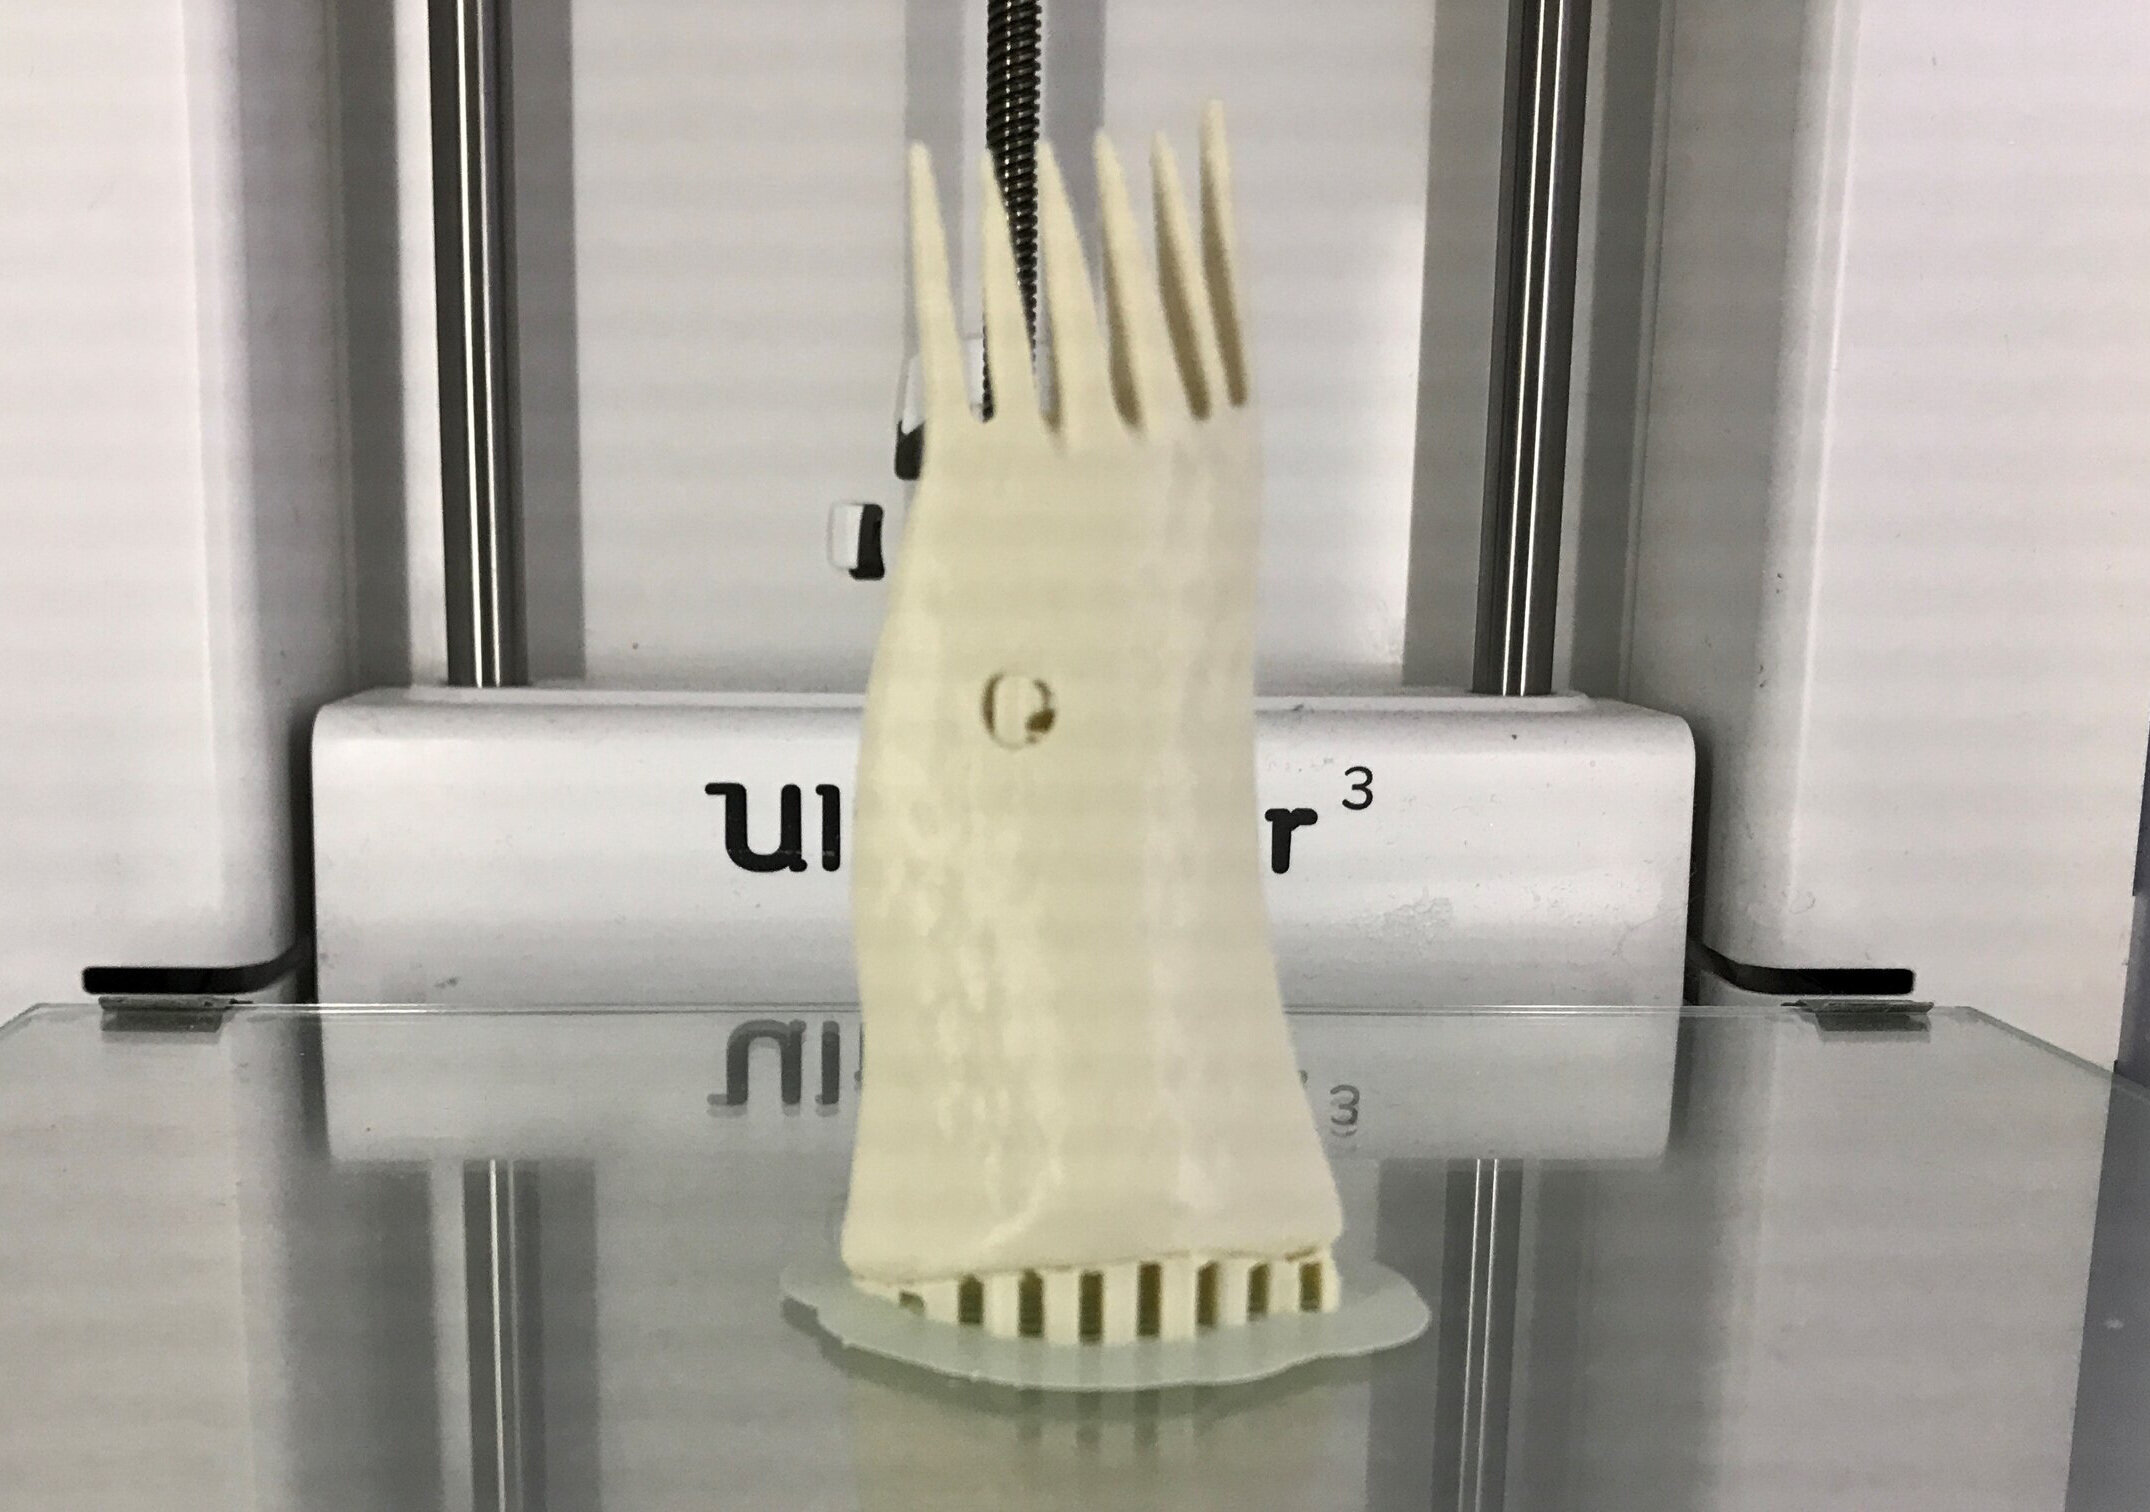   Antler comb 3D printing | Image: Eagle Labs Edinburgh  